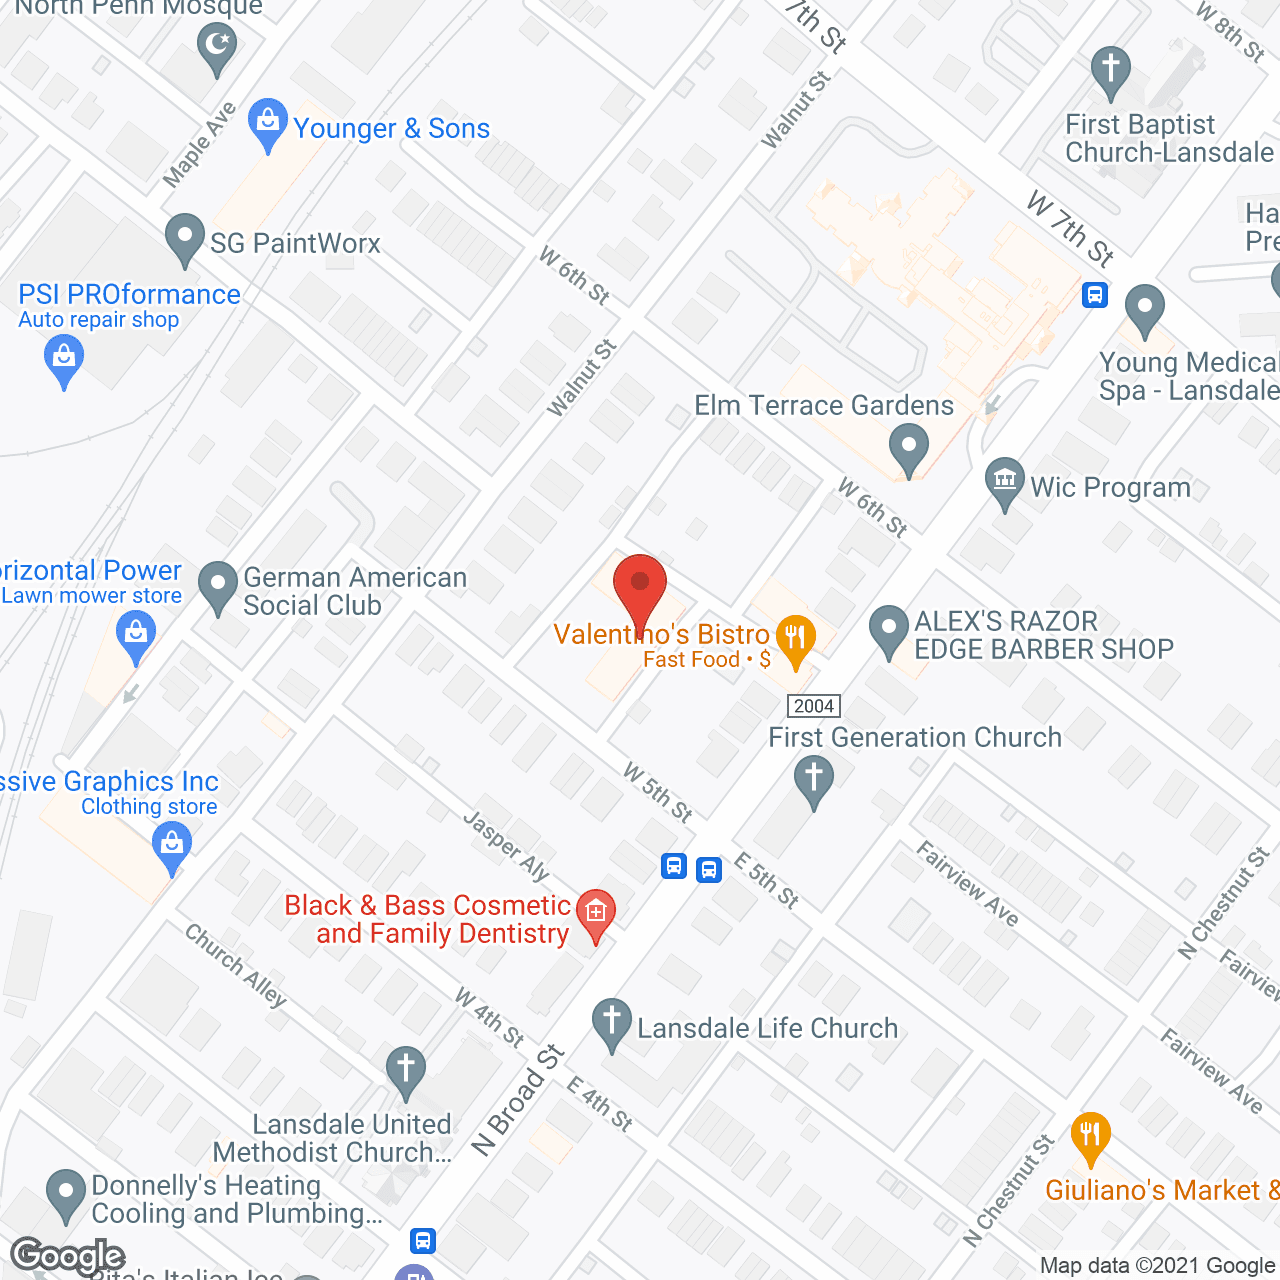 Golden LivingCenter - Lansdale in google map